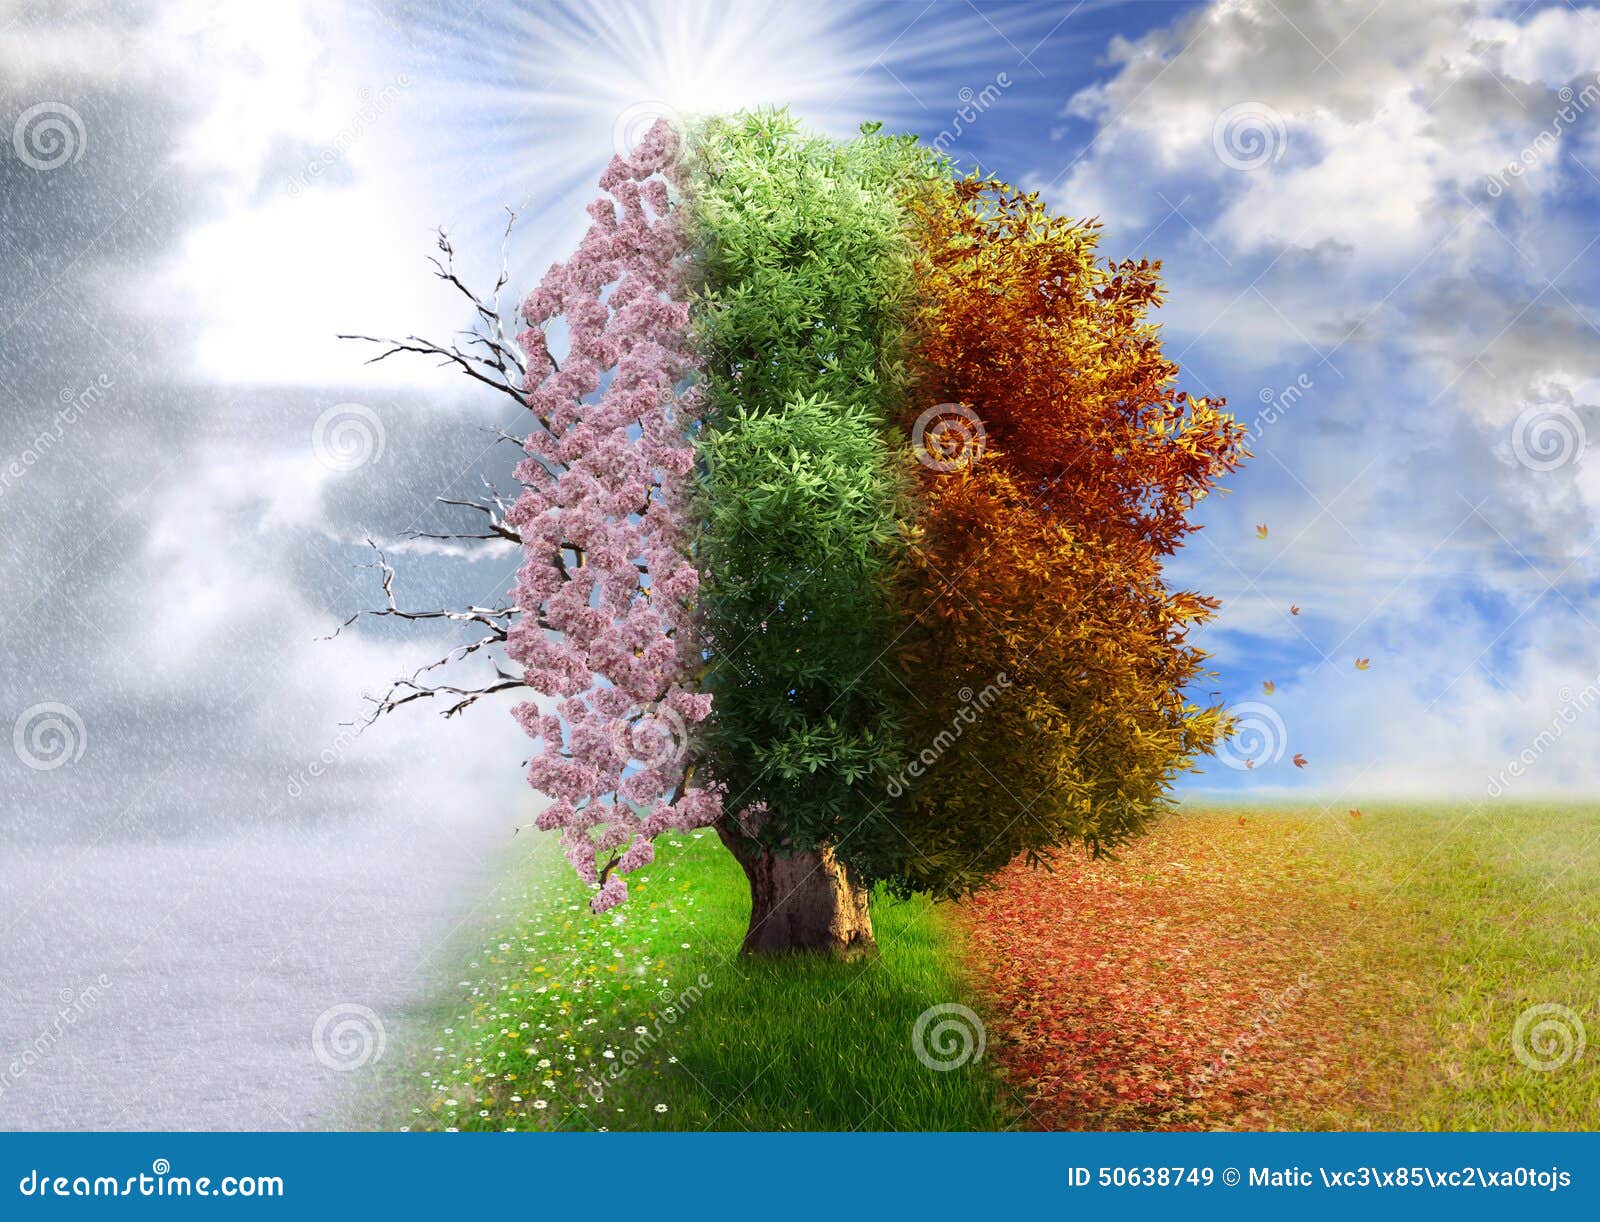 four season tree, photo manipulation